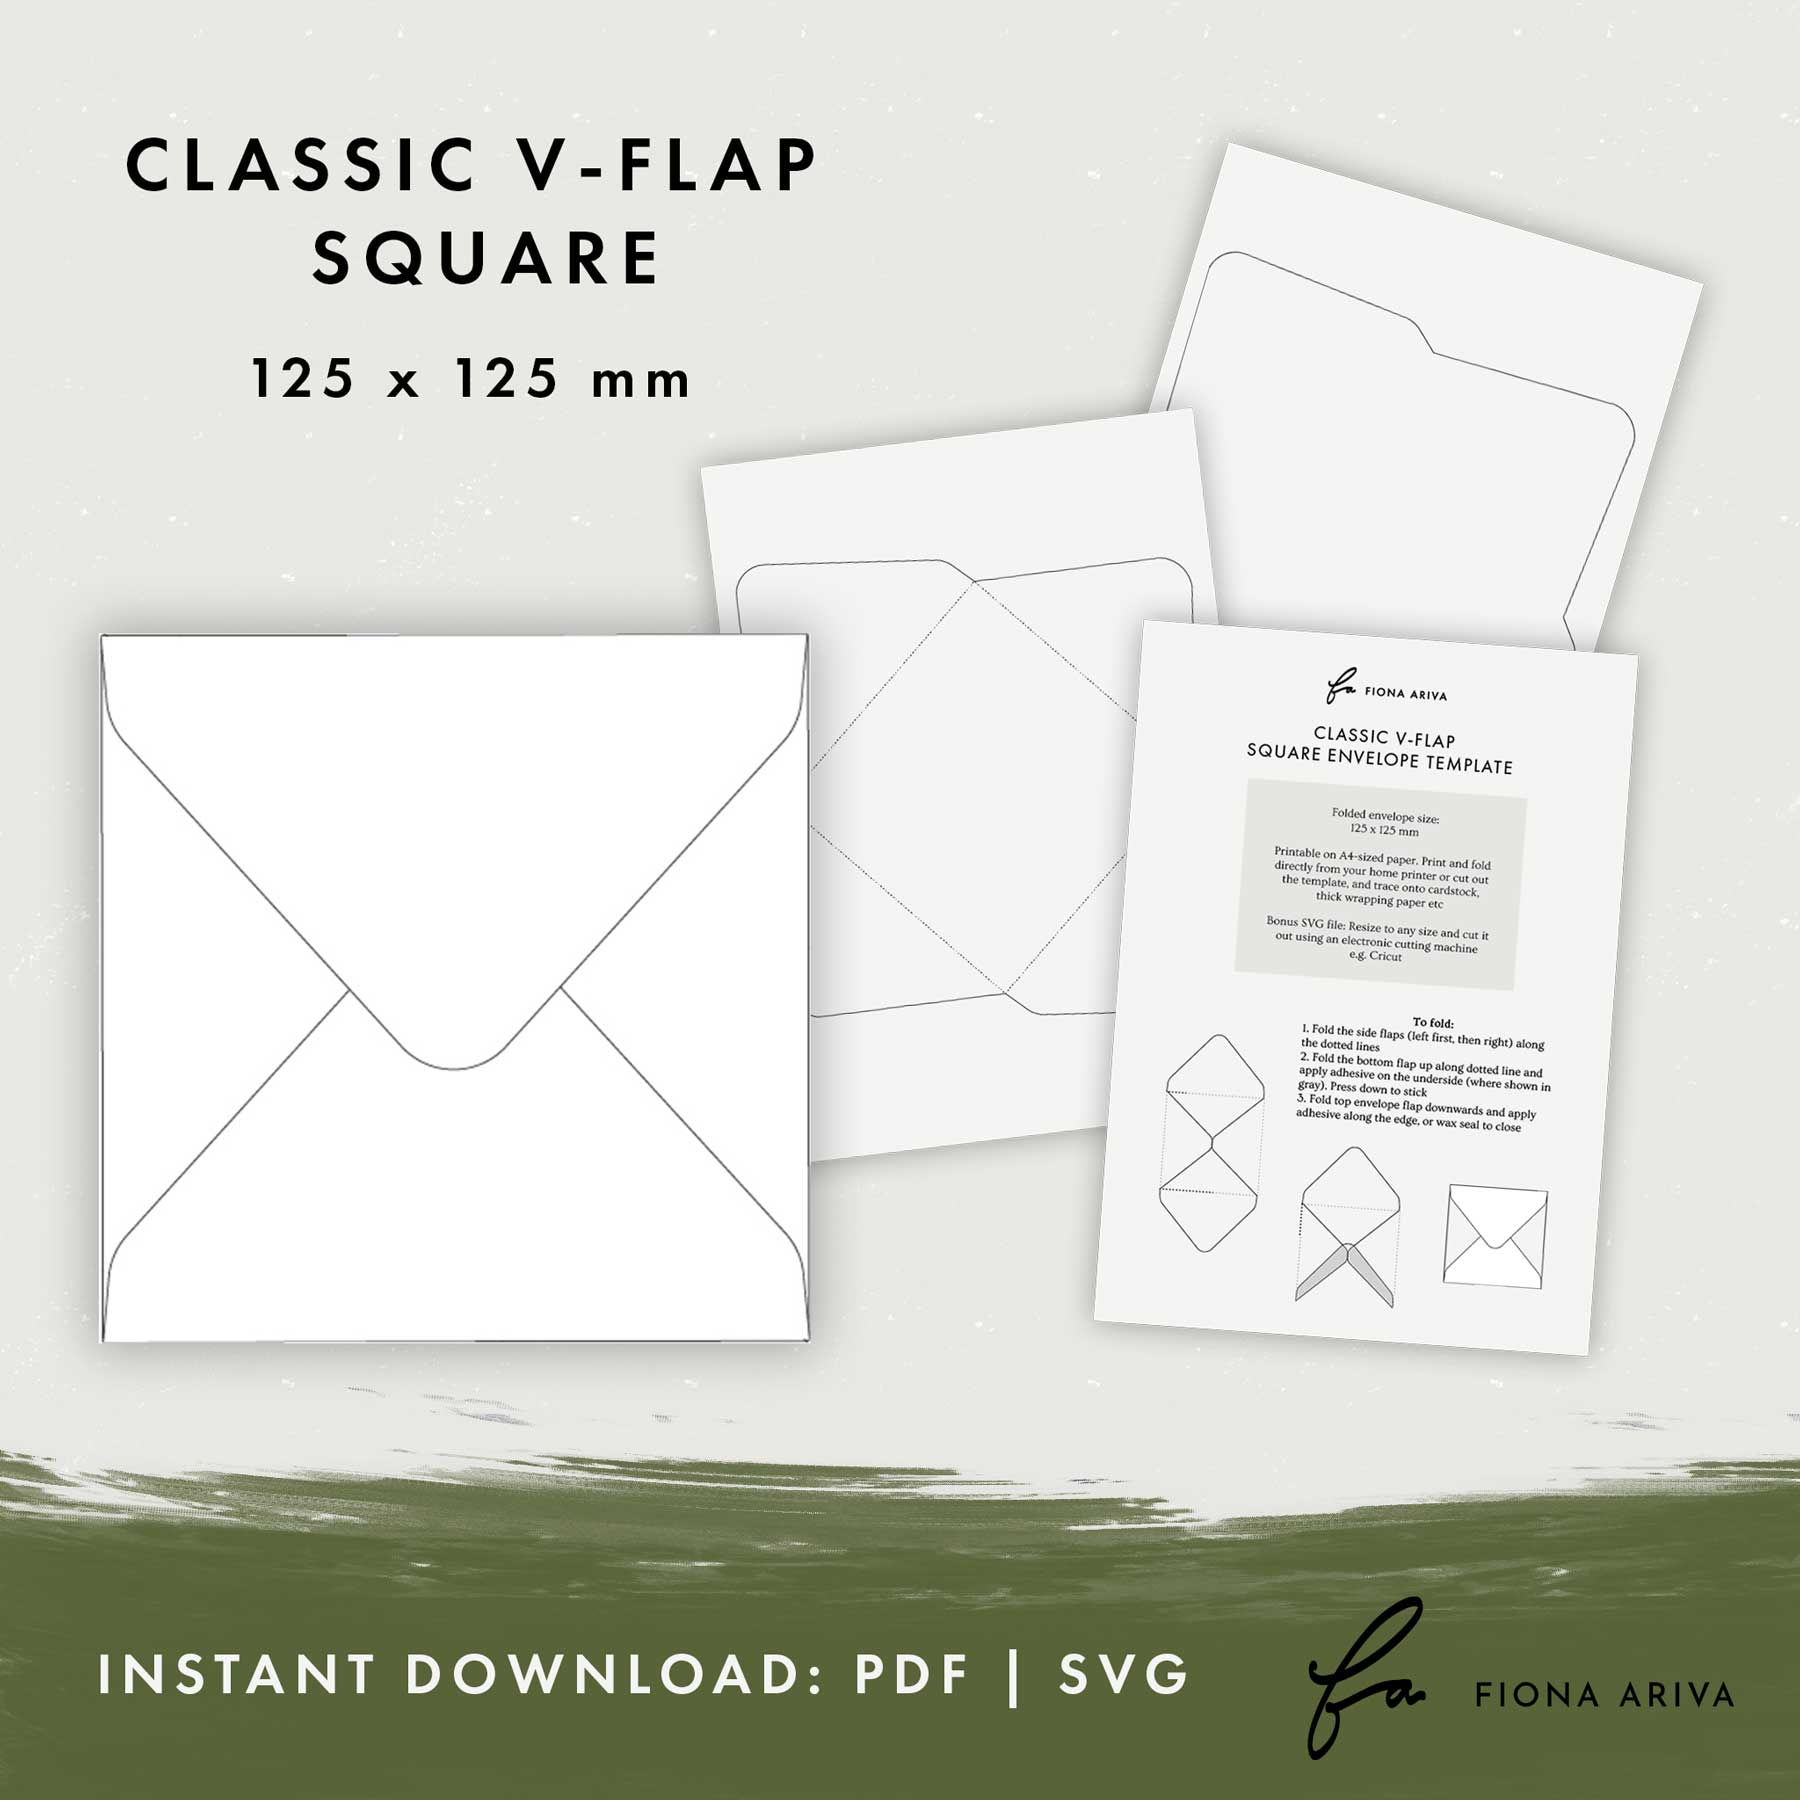 Classic V-Flap Square Downloadable Envelope Template 125 x125mm